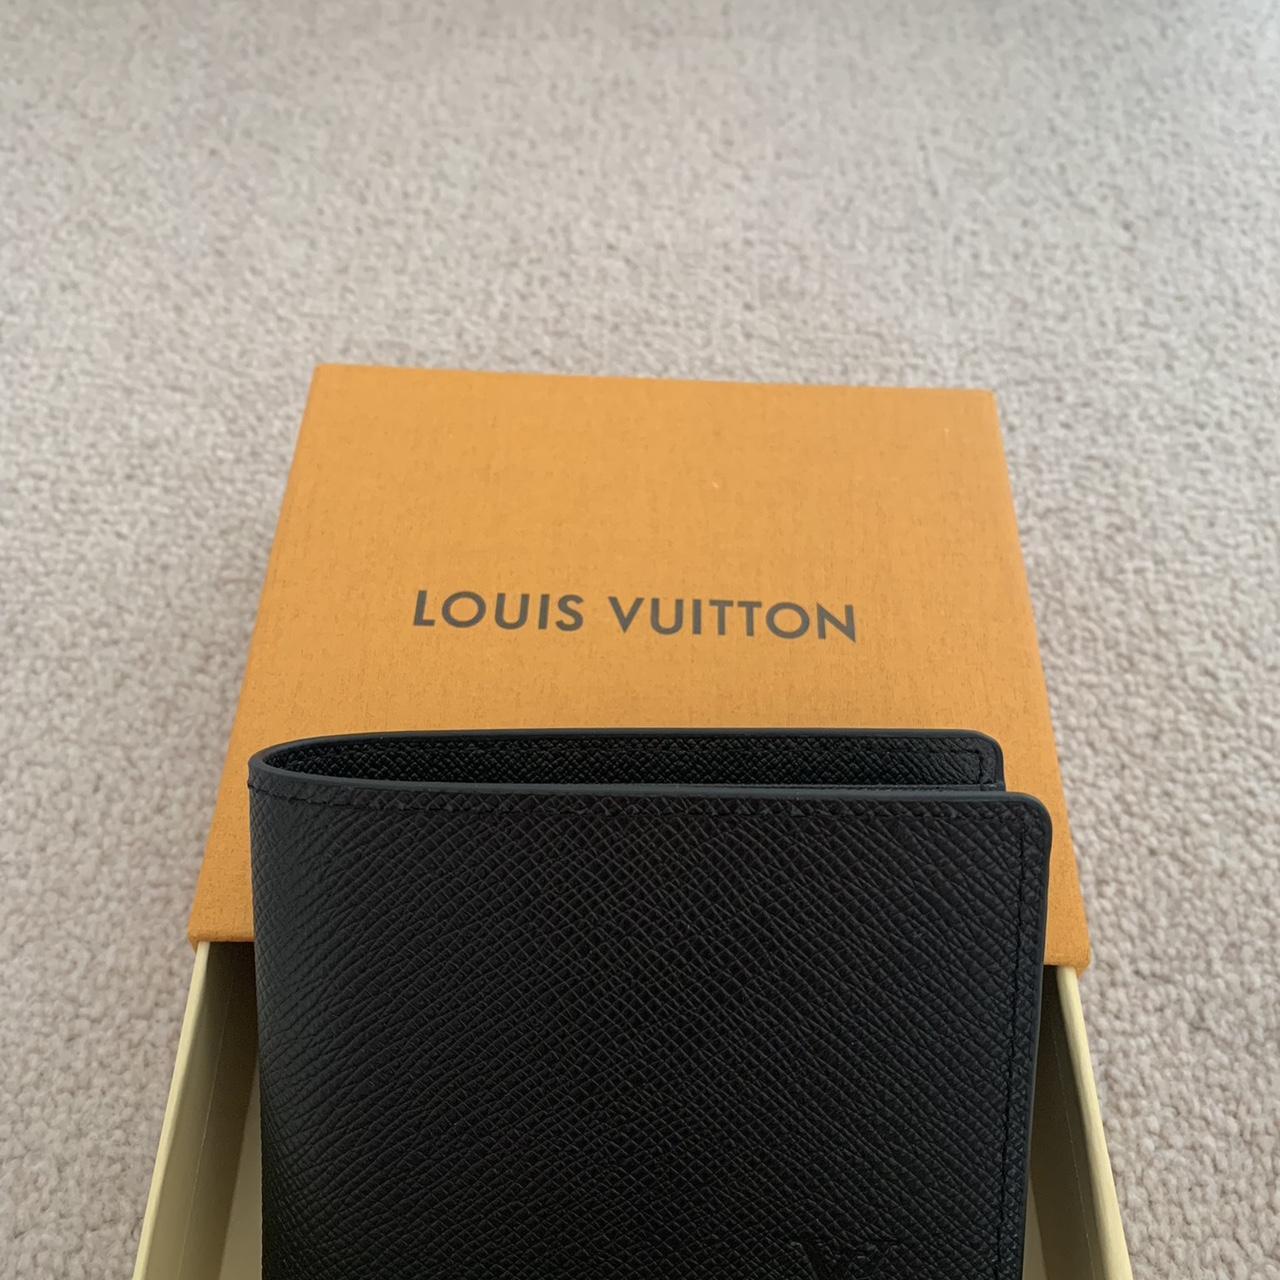 The Louis Vuitton x Supreme Slender Wallet is a - Depop